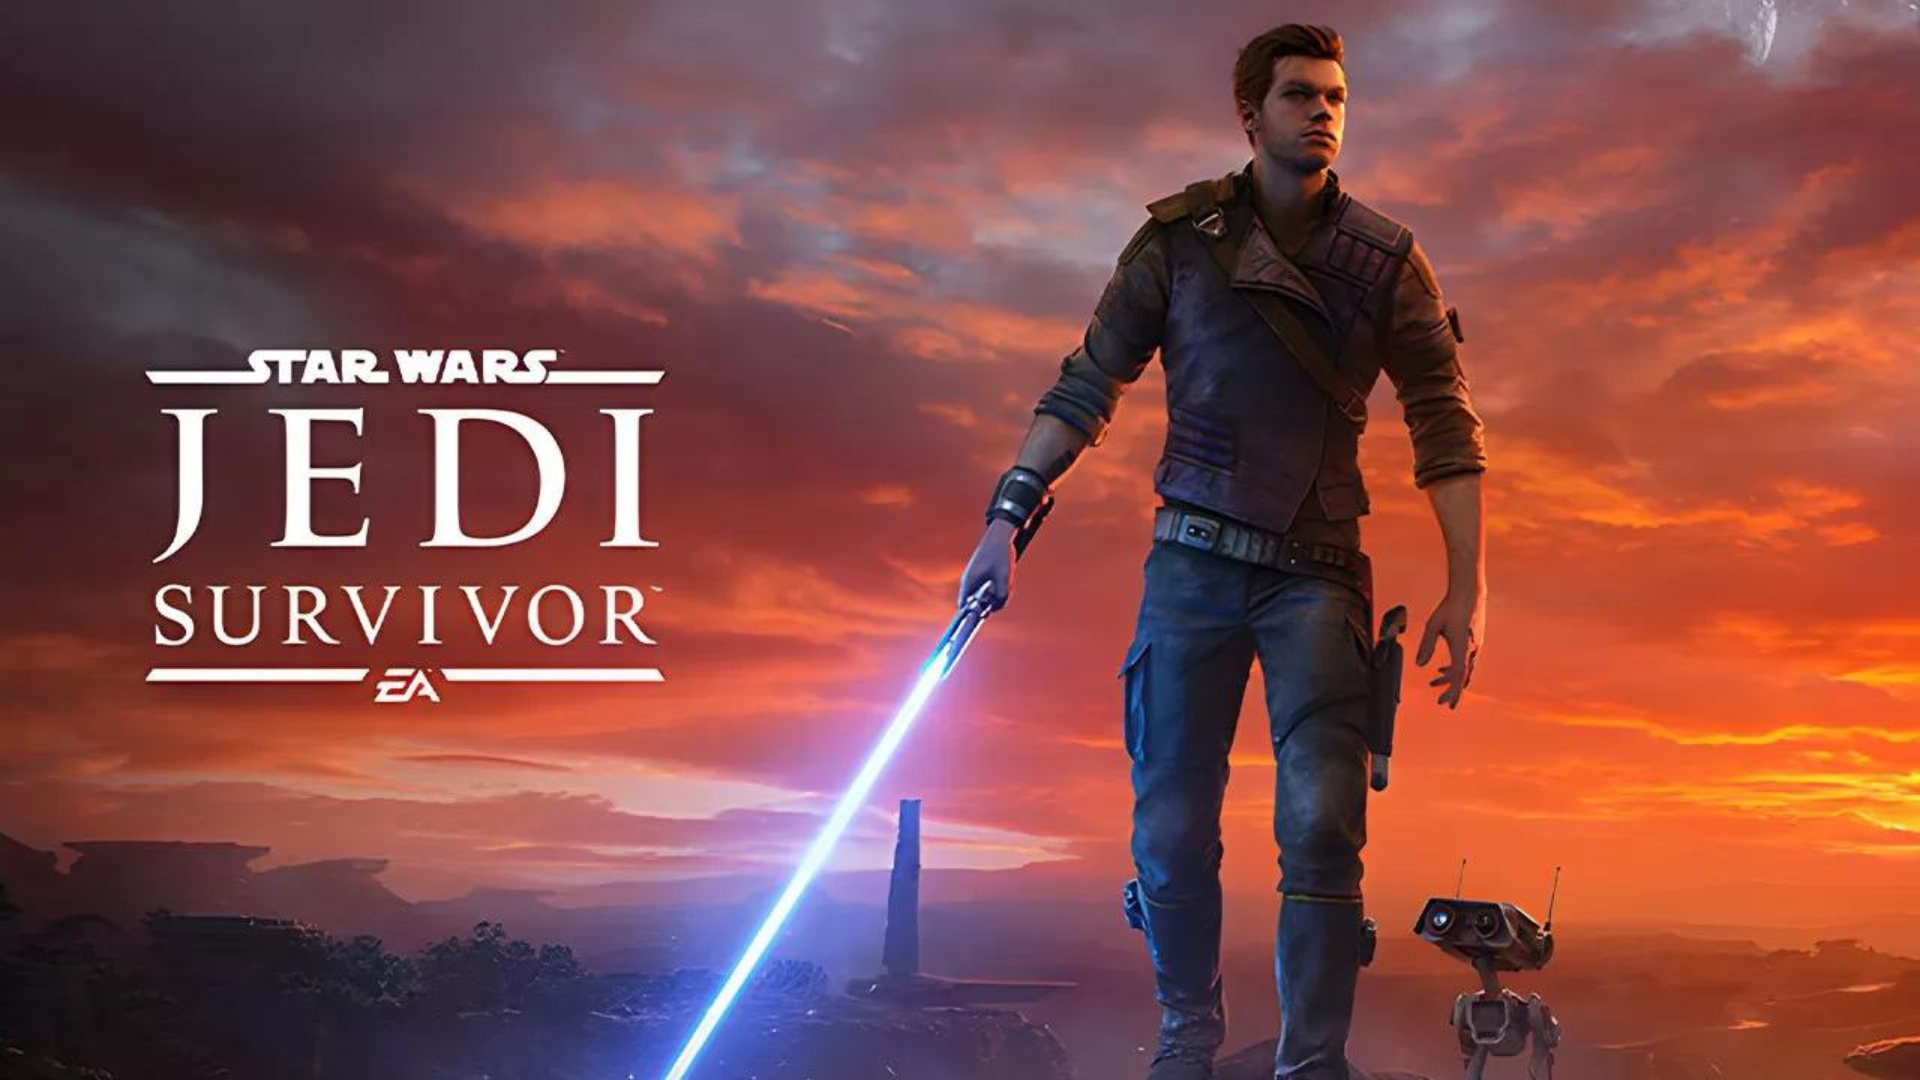  Star Wars Jedi: Survivor - Spunta la key art dell'attesissimo sequel